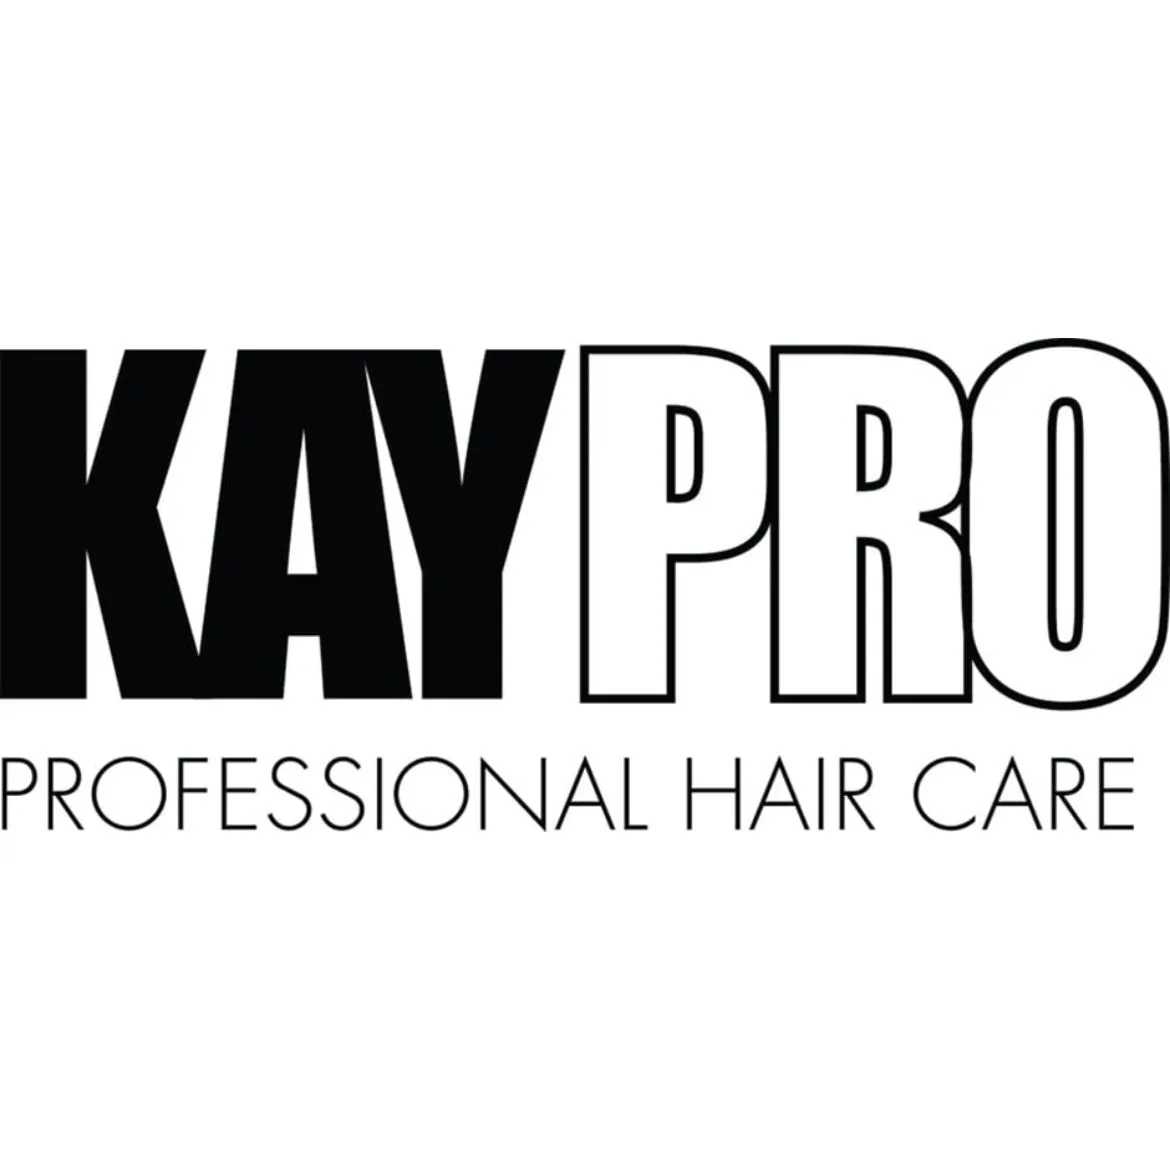 Keypro Kay Pro